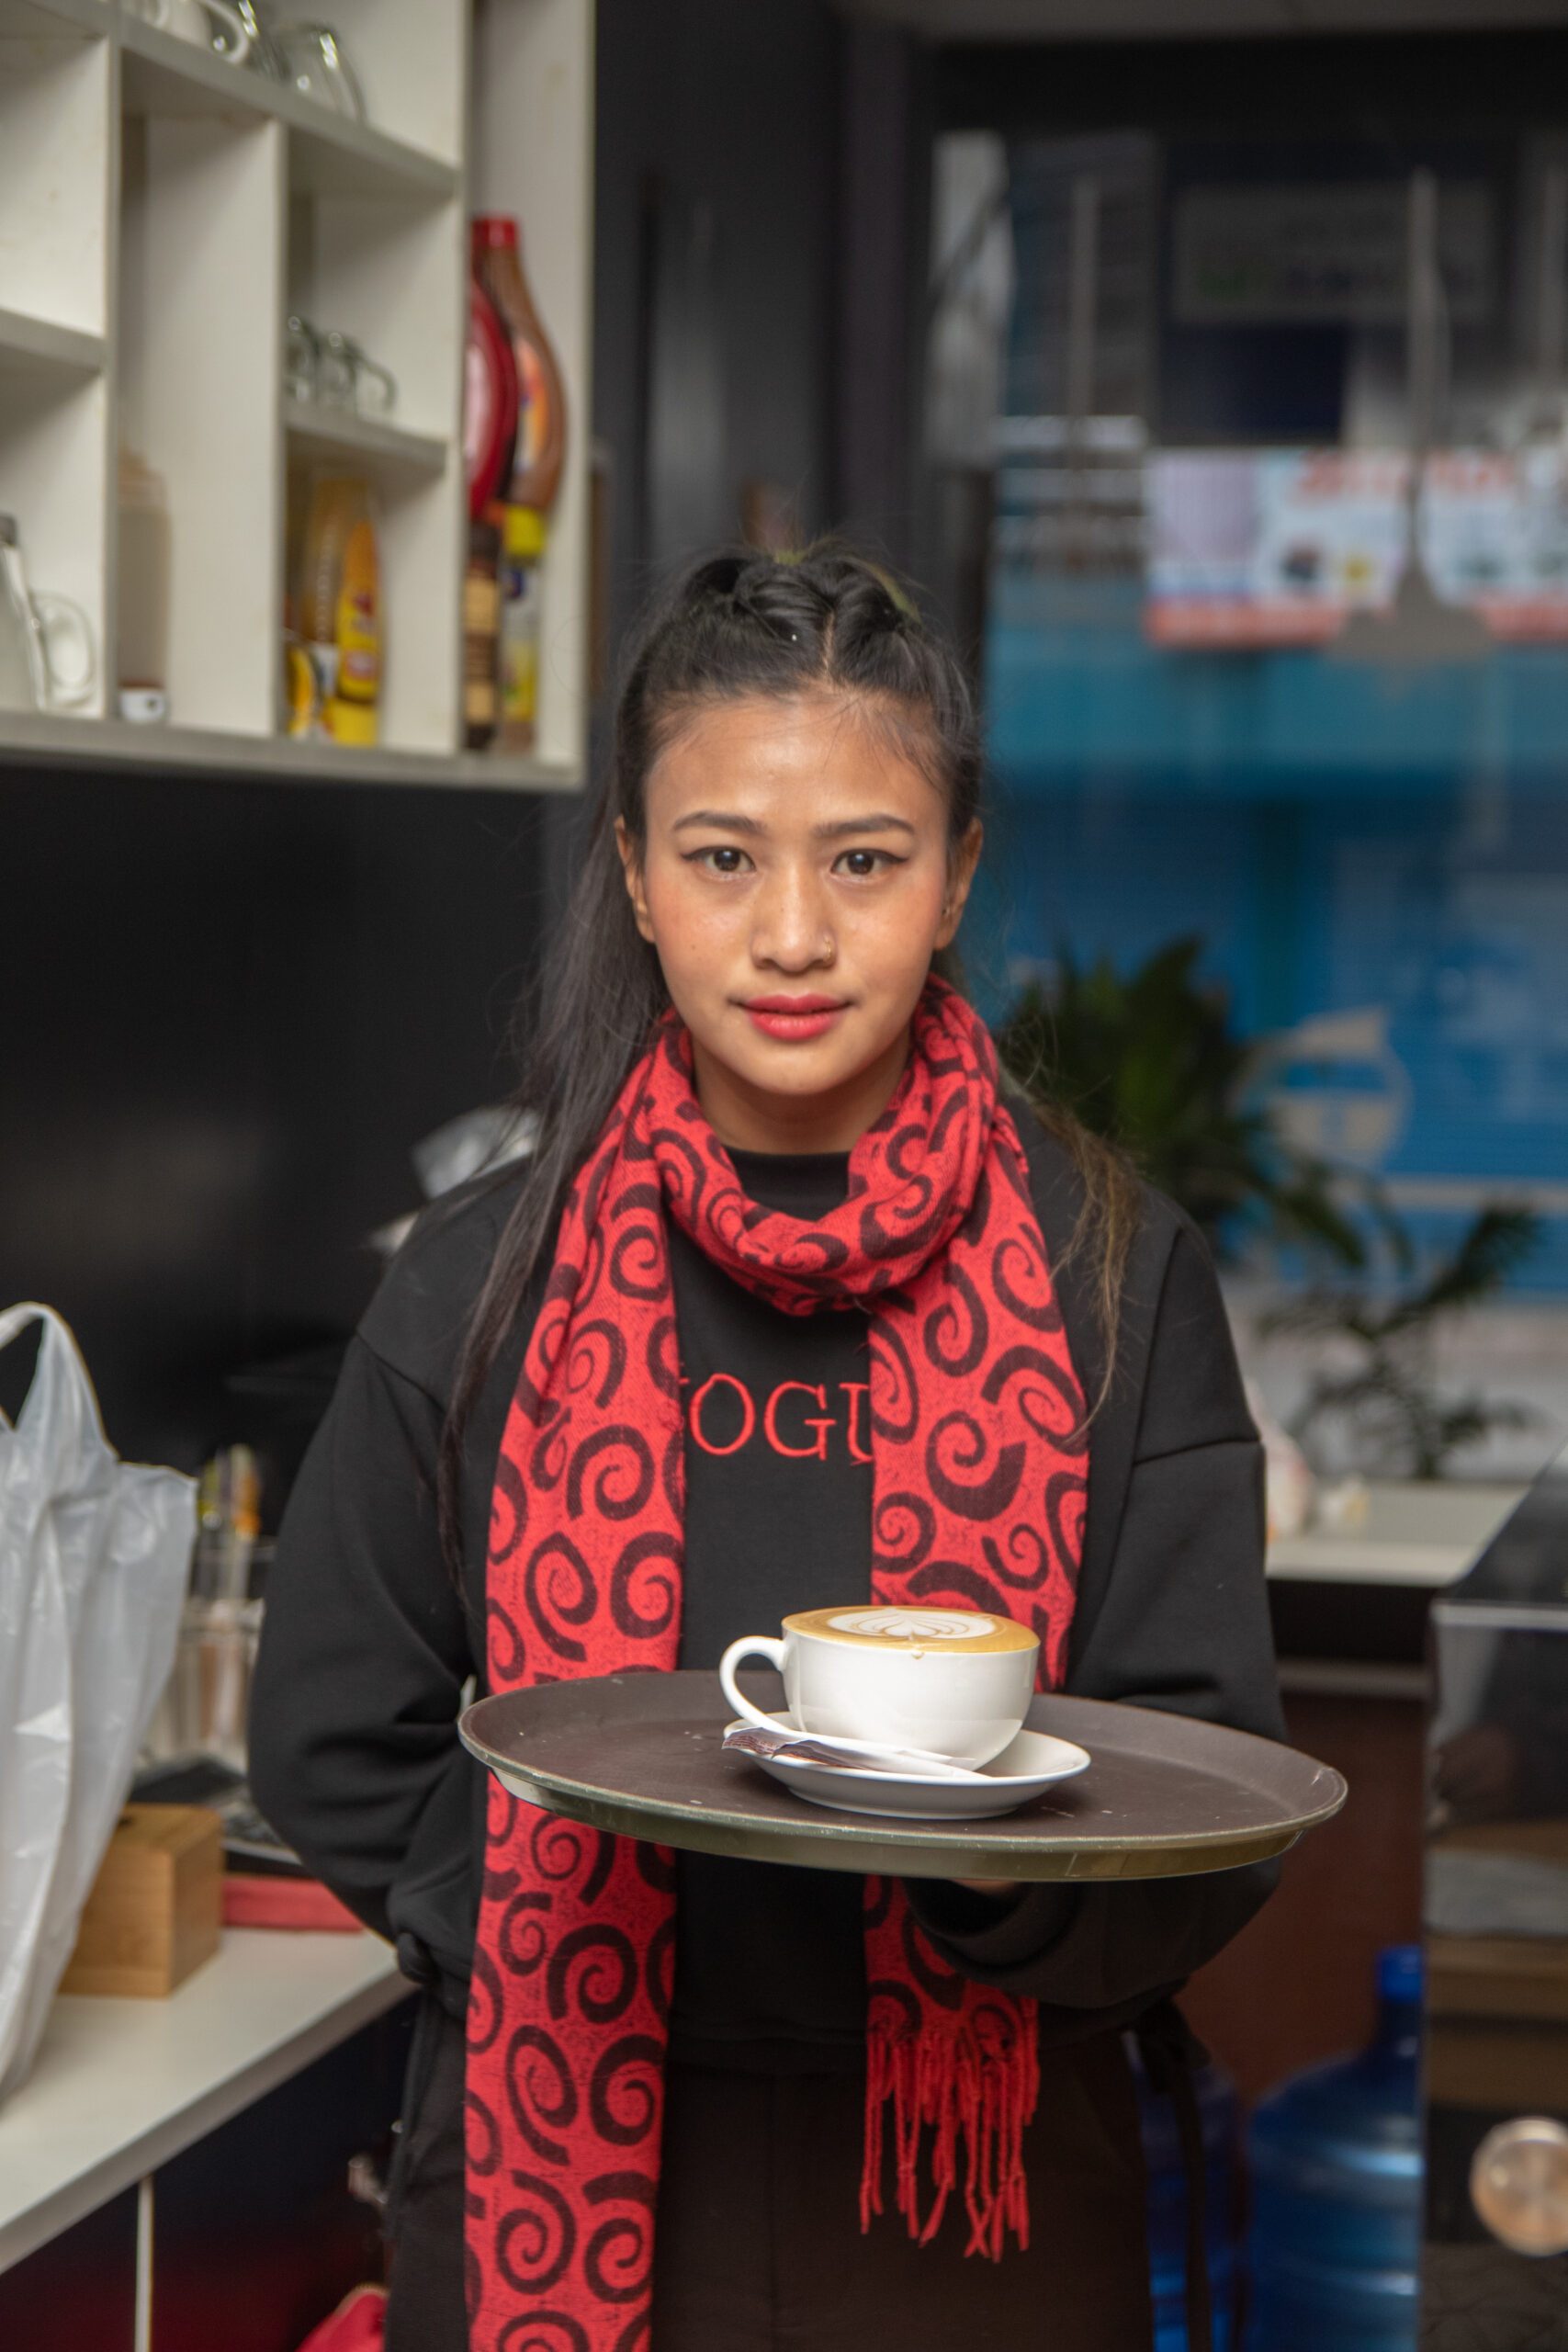 Urmila working at a cafe.